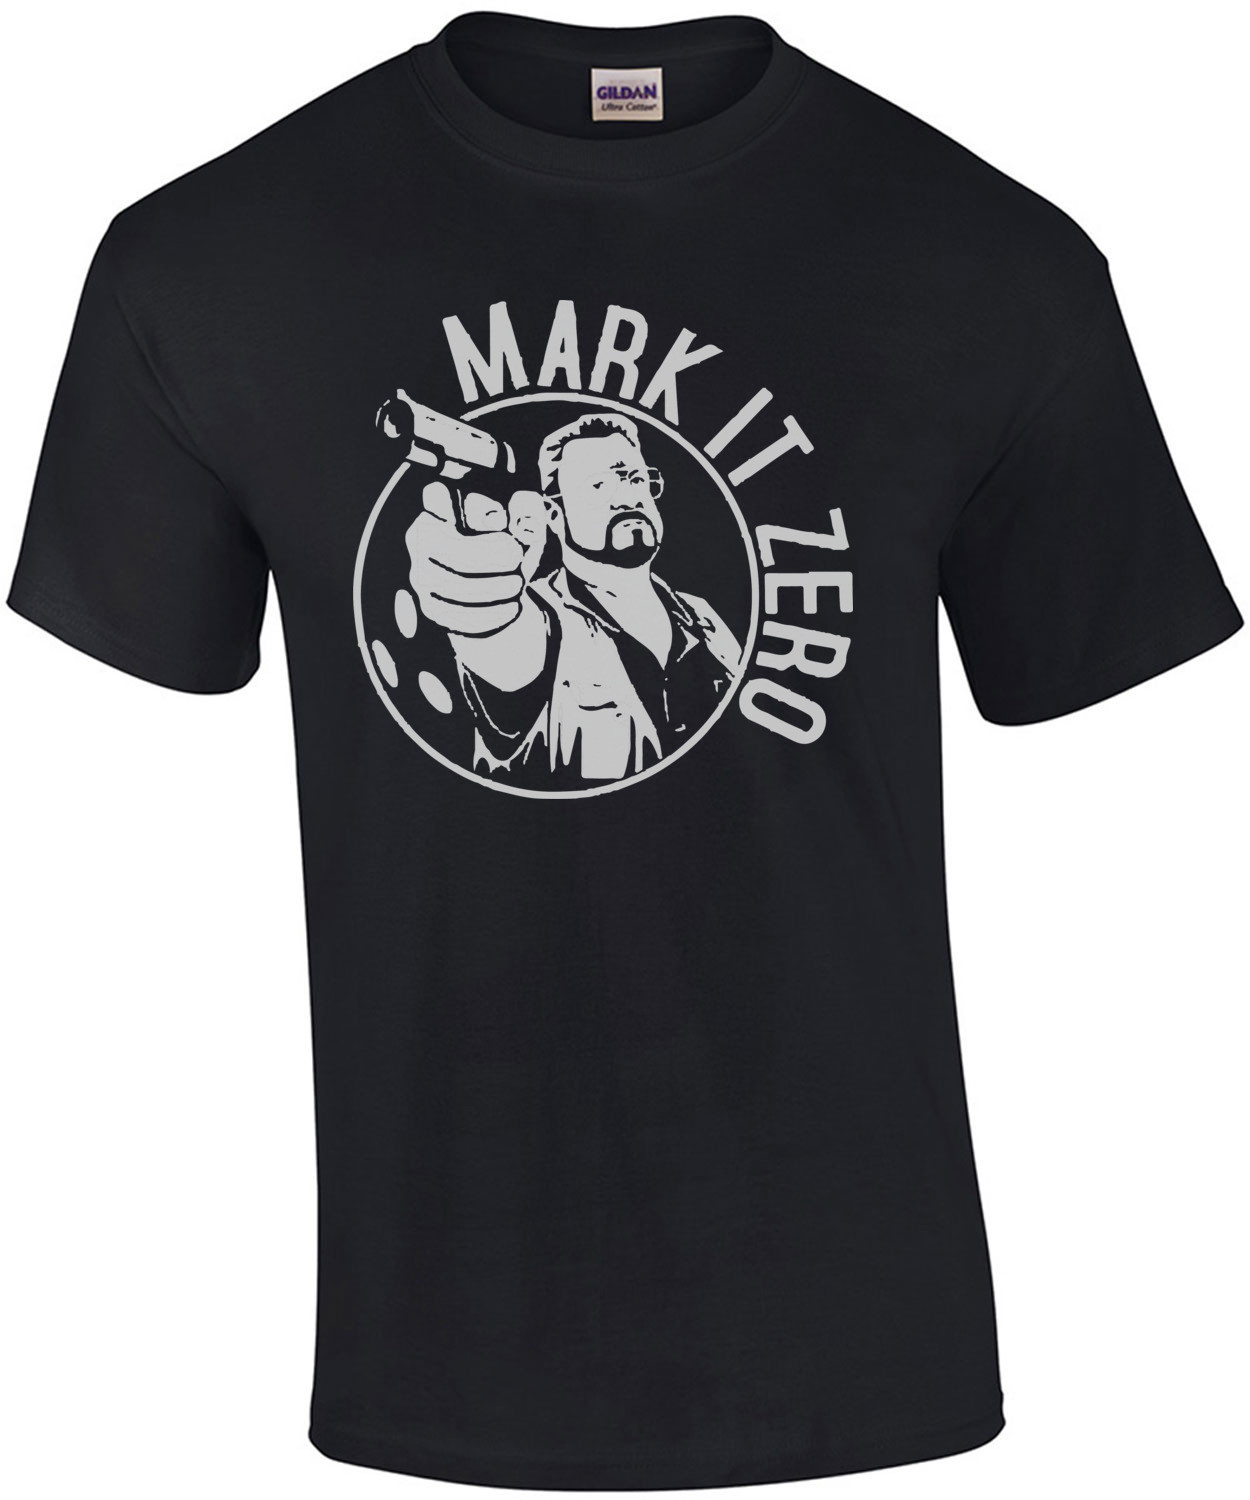 Mark It Zero - The Big Lebowski T-Shirt shirt